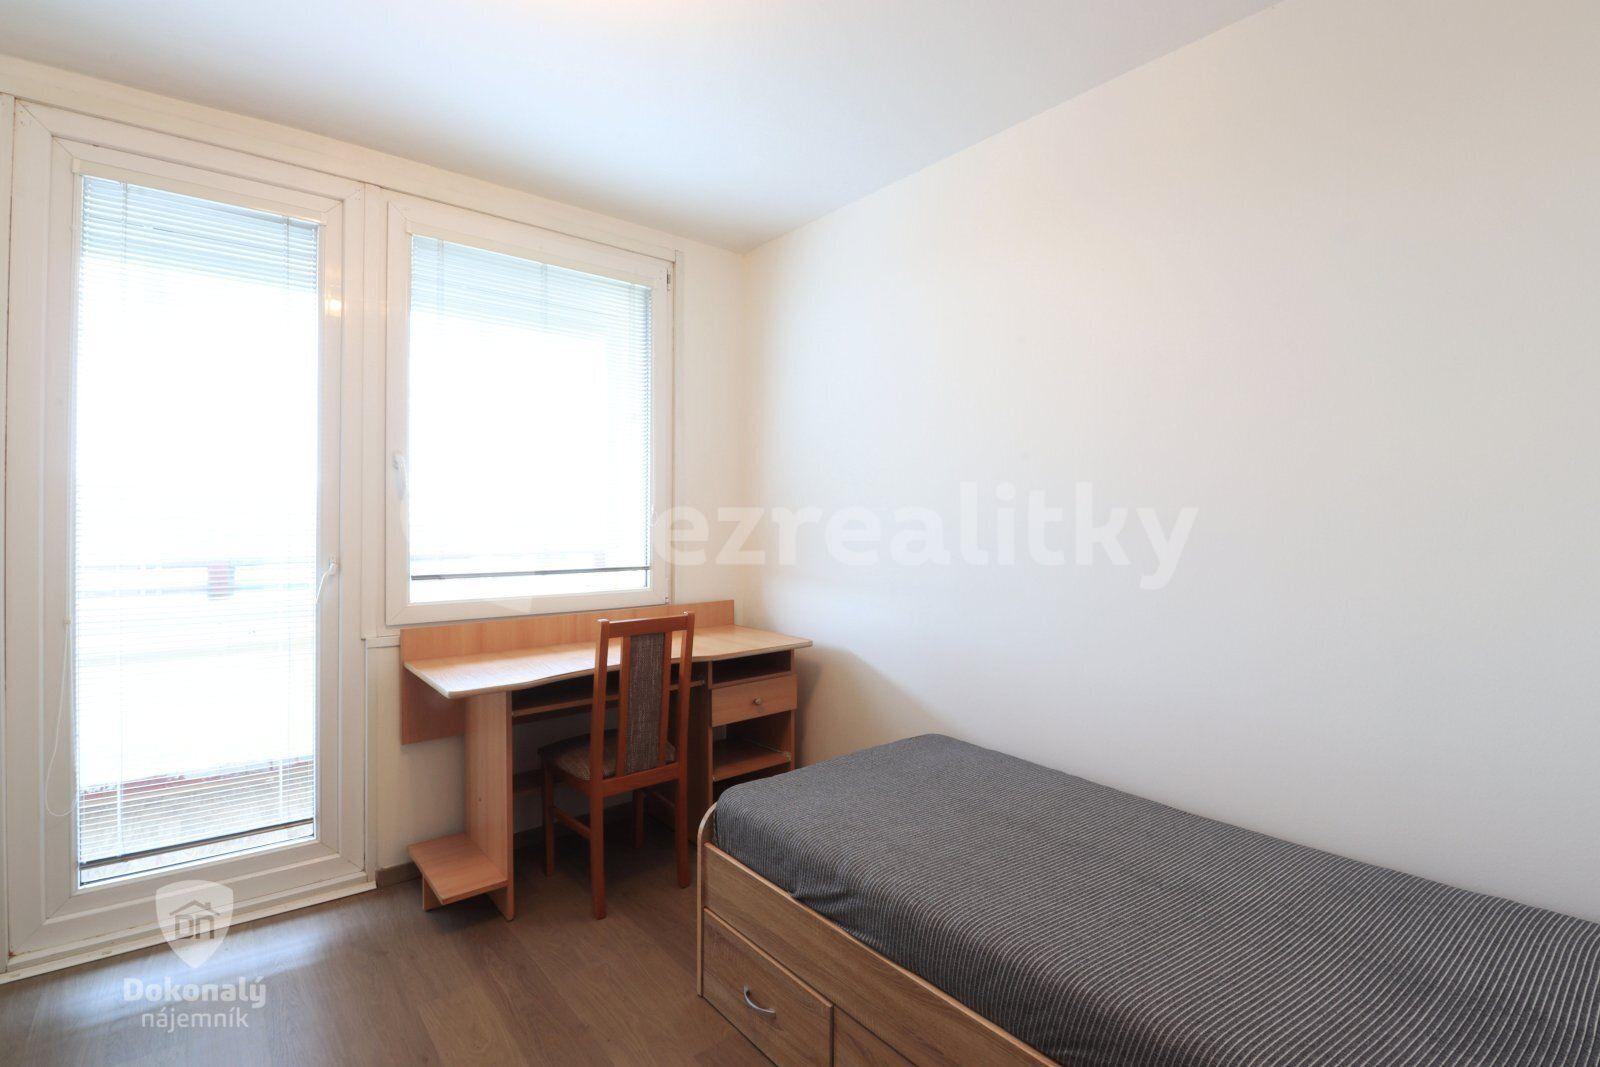 3 bedroom flat to rent, 73 m², Vysočanská, Prague, Prague